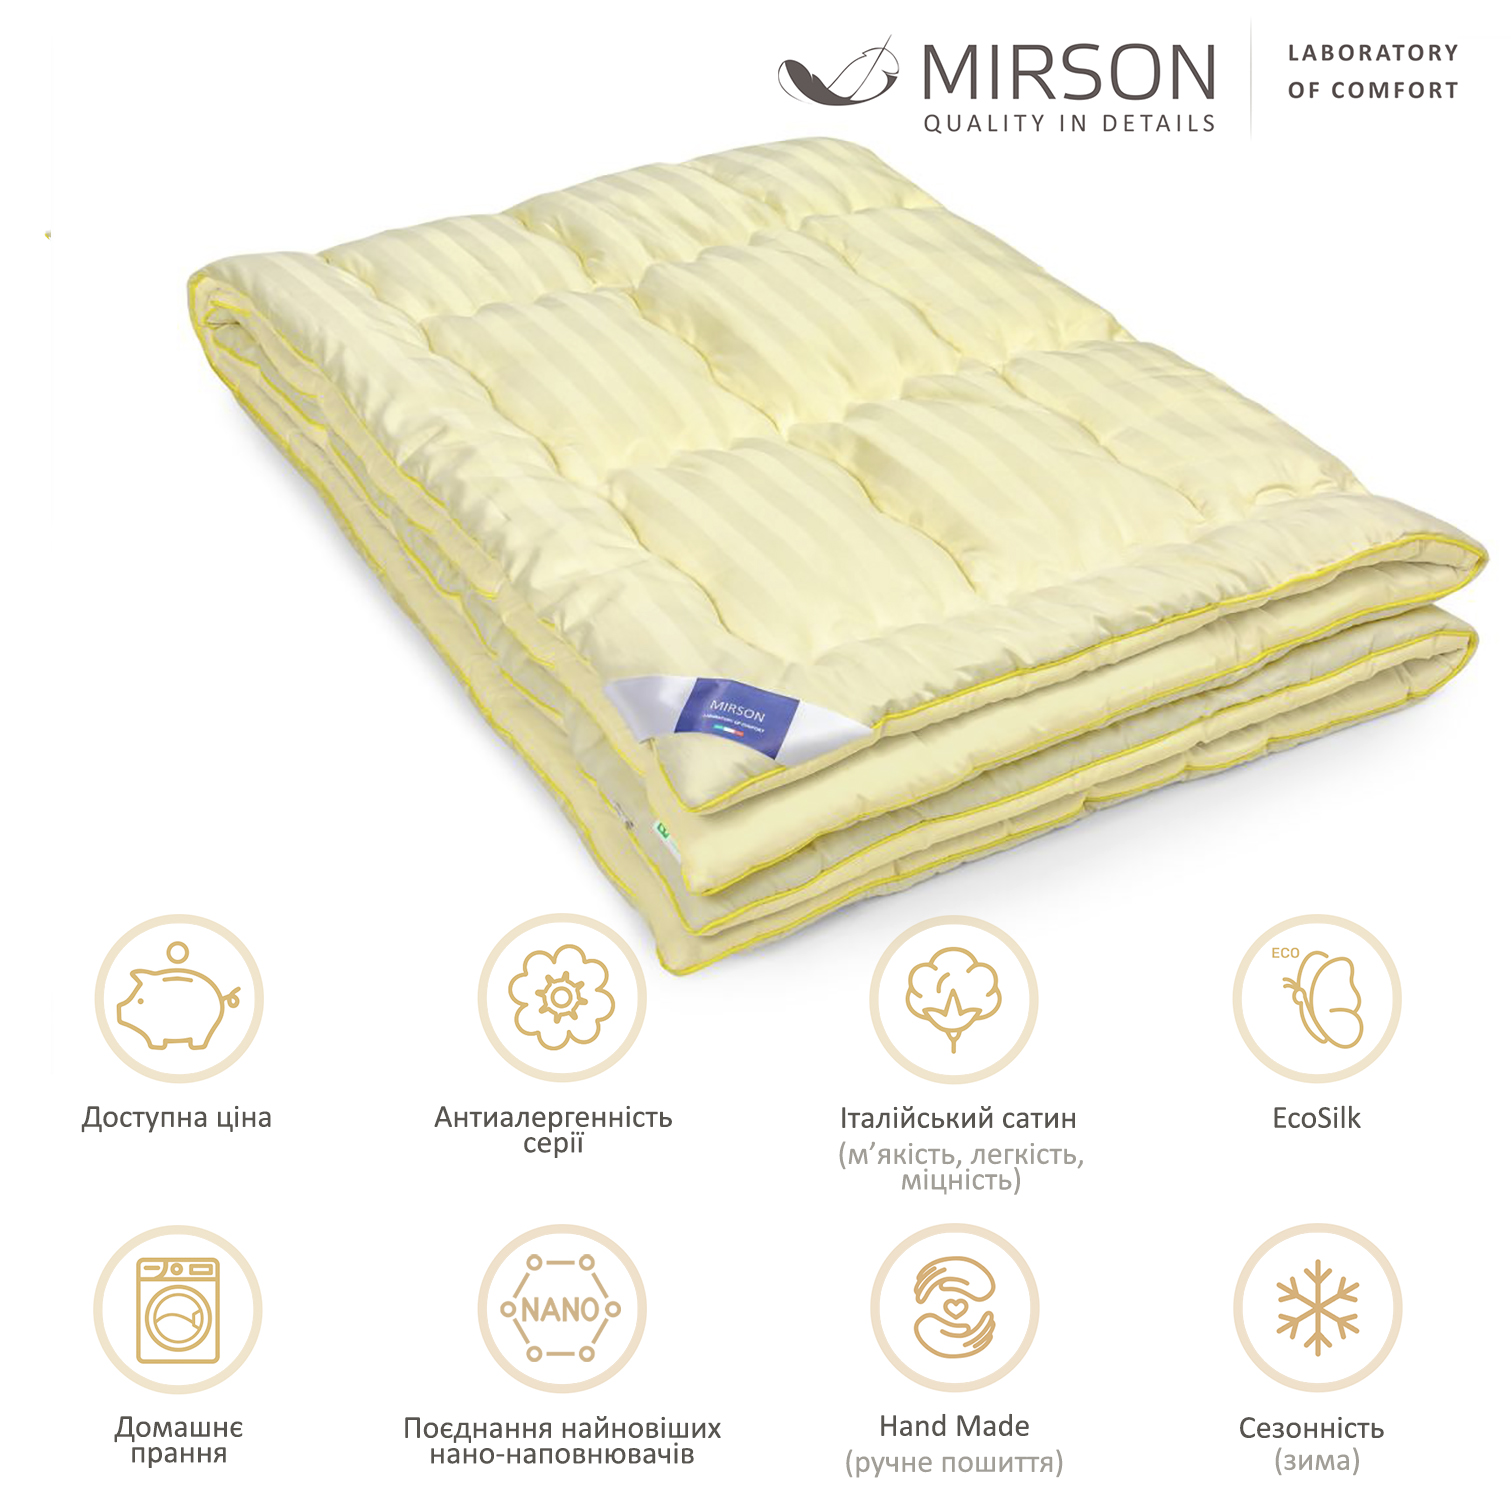 Одеяло антиаллергенное MirSon Carmela Hand Made EcoSilk №068, зимнее, 110x140 см, светло-желтое - фото 4